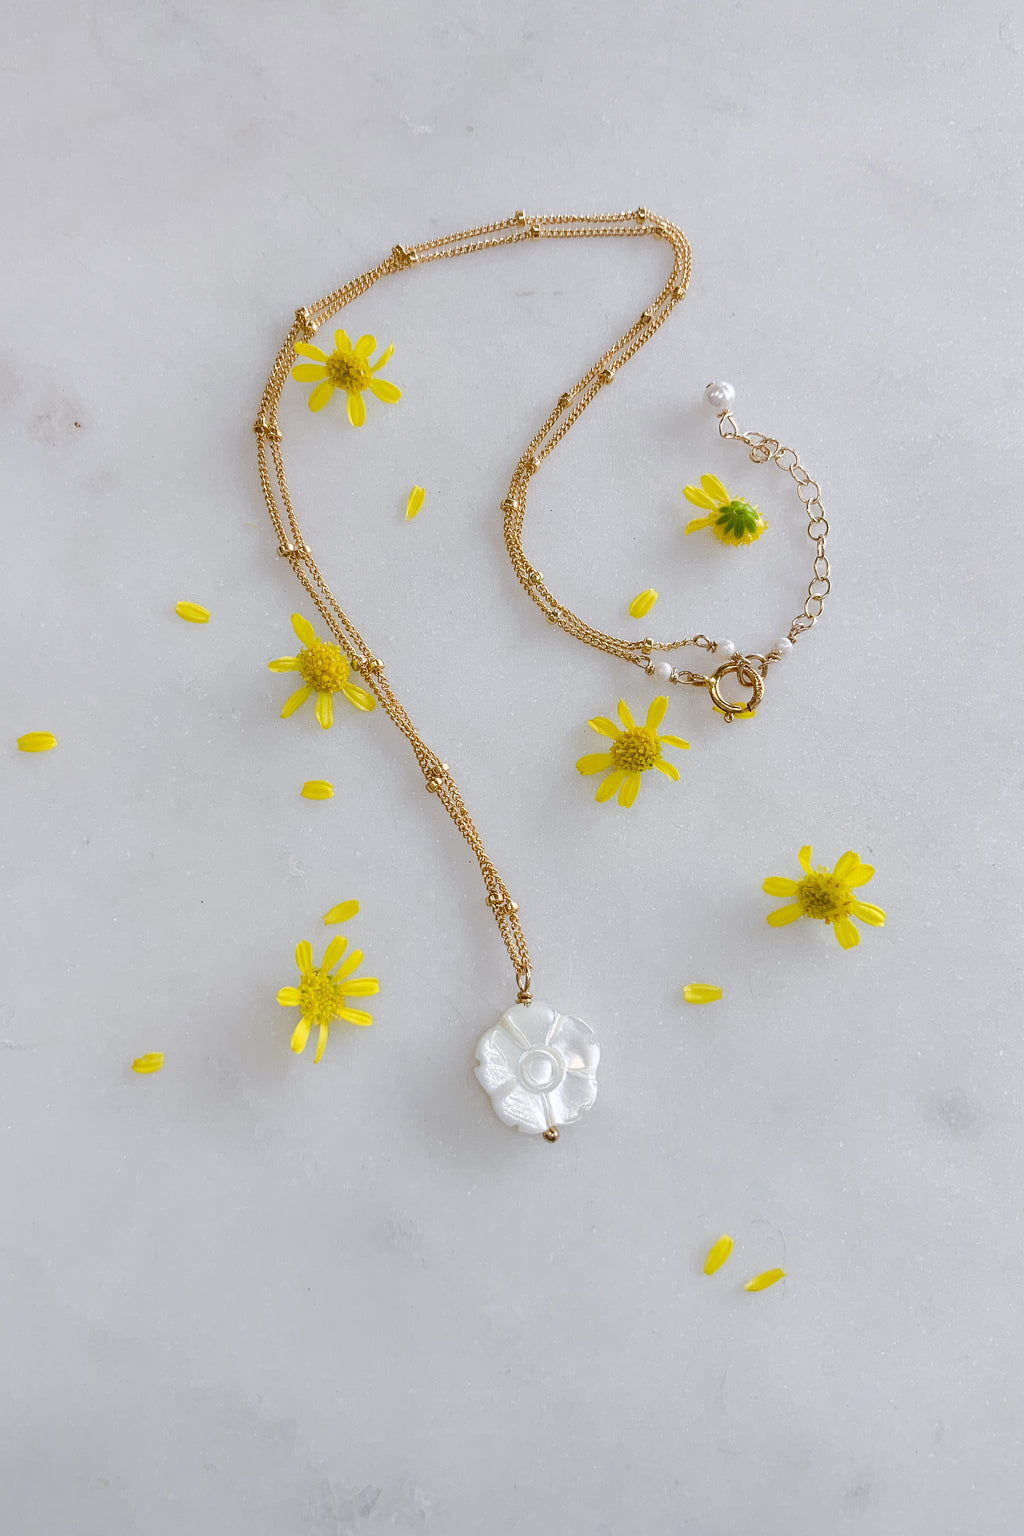 White Flower Satellite Necklace Gold Fill